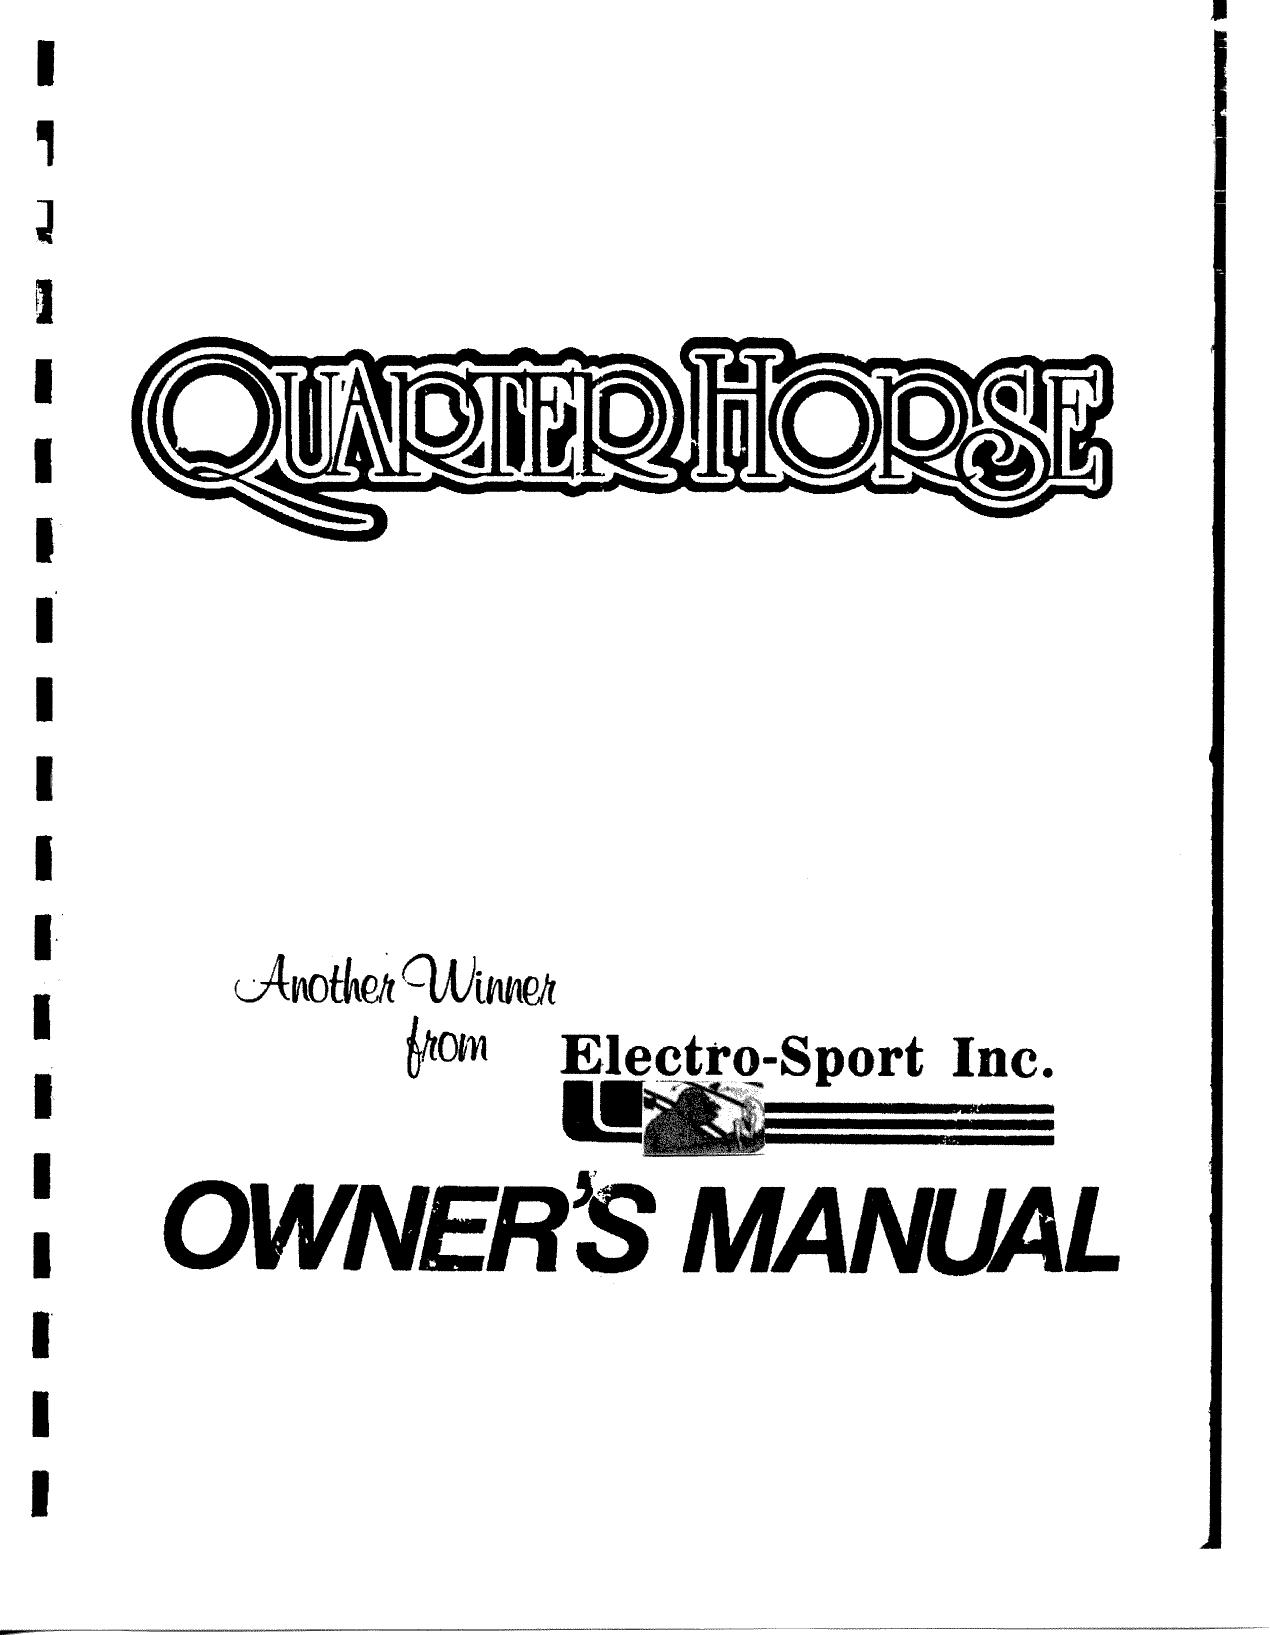 QuarterHorse Manual